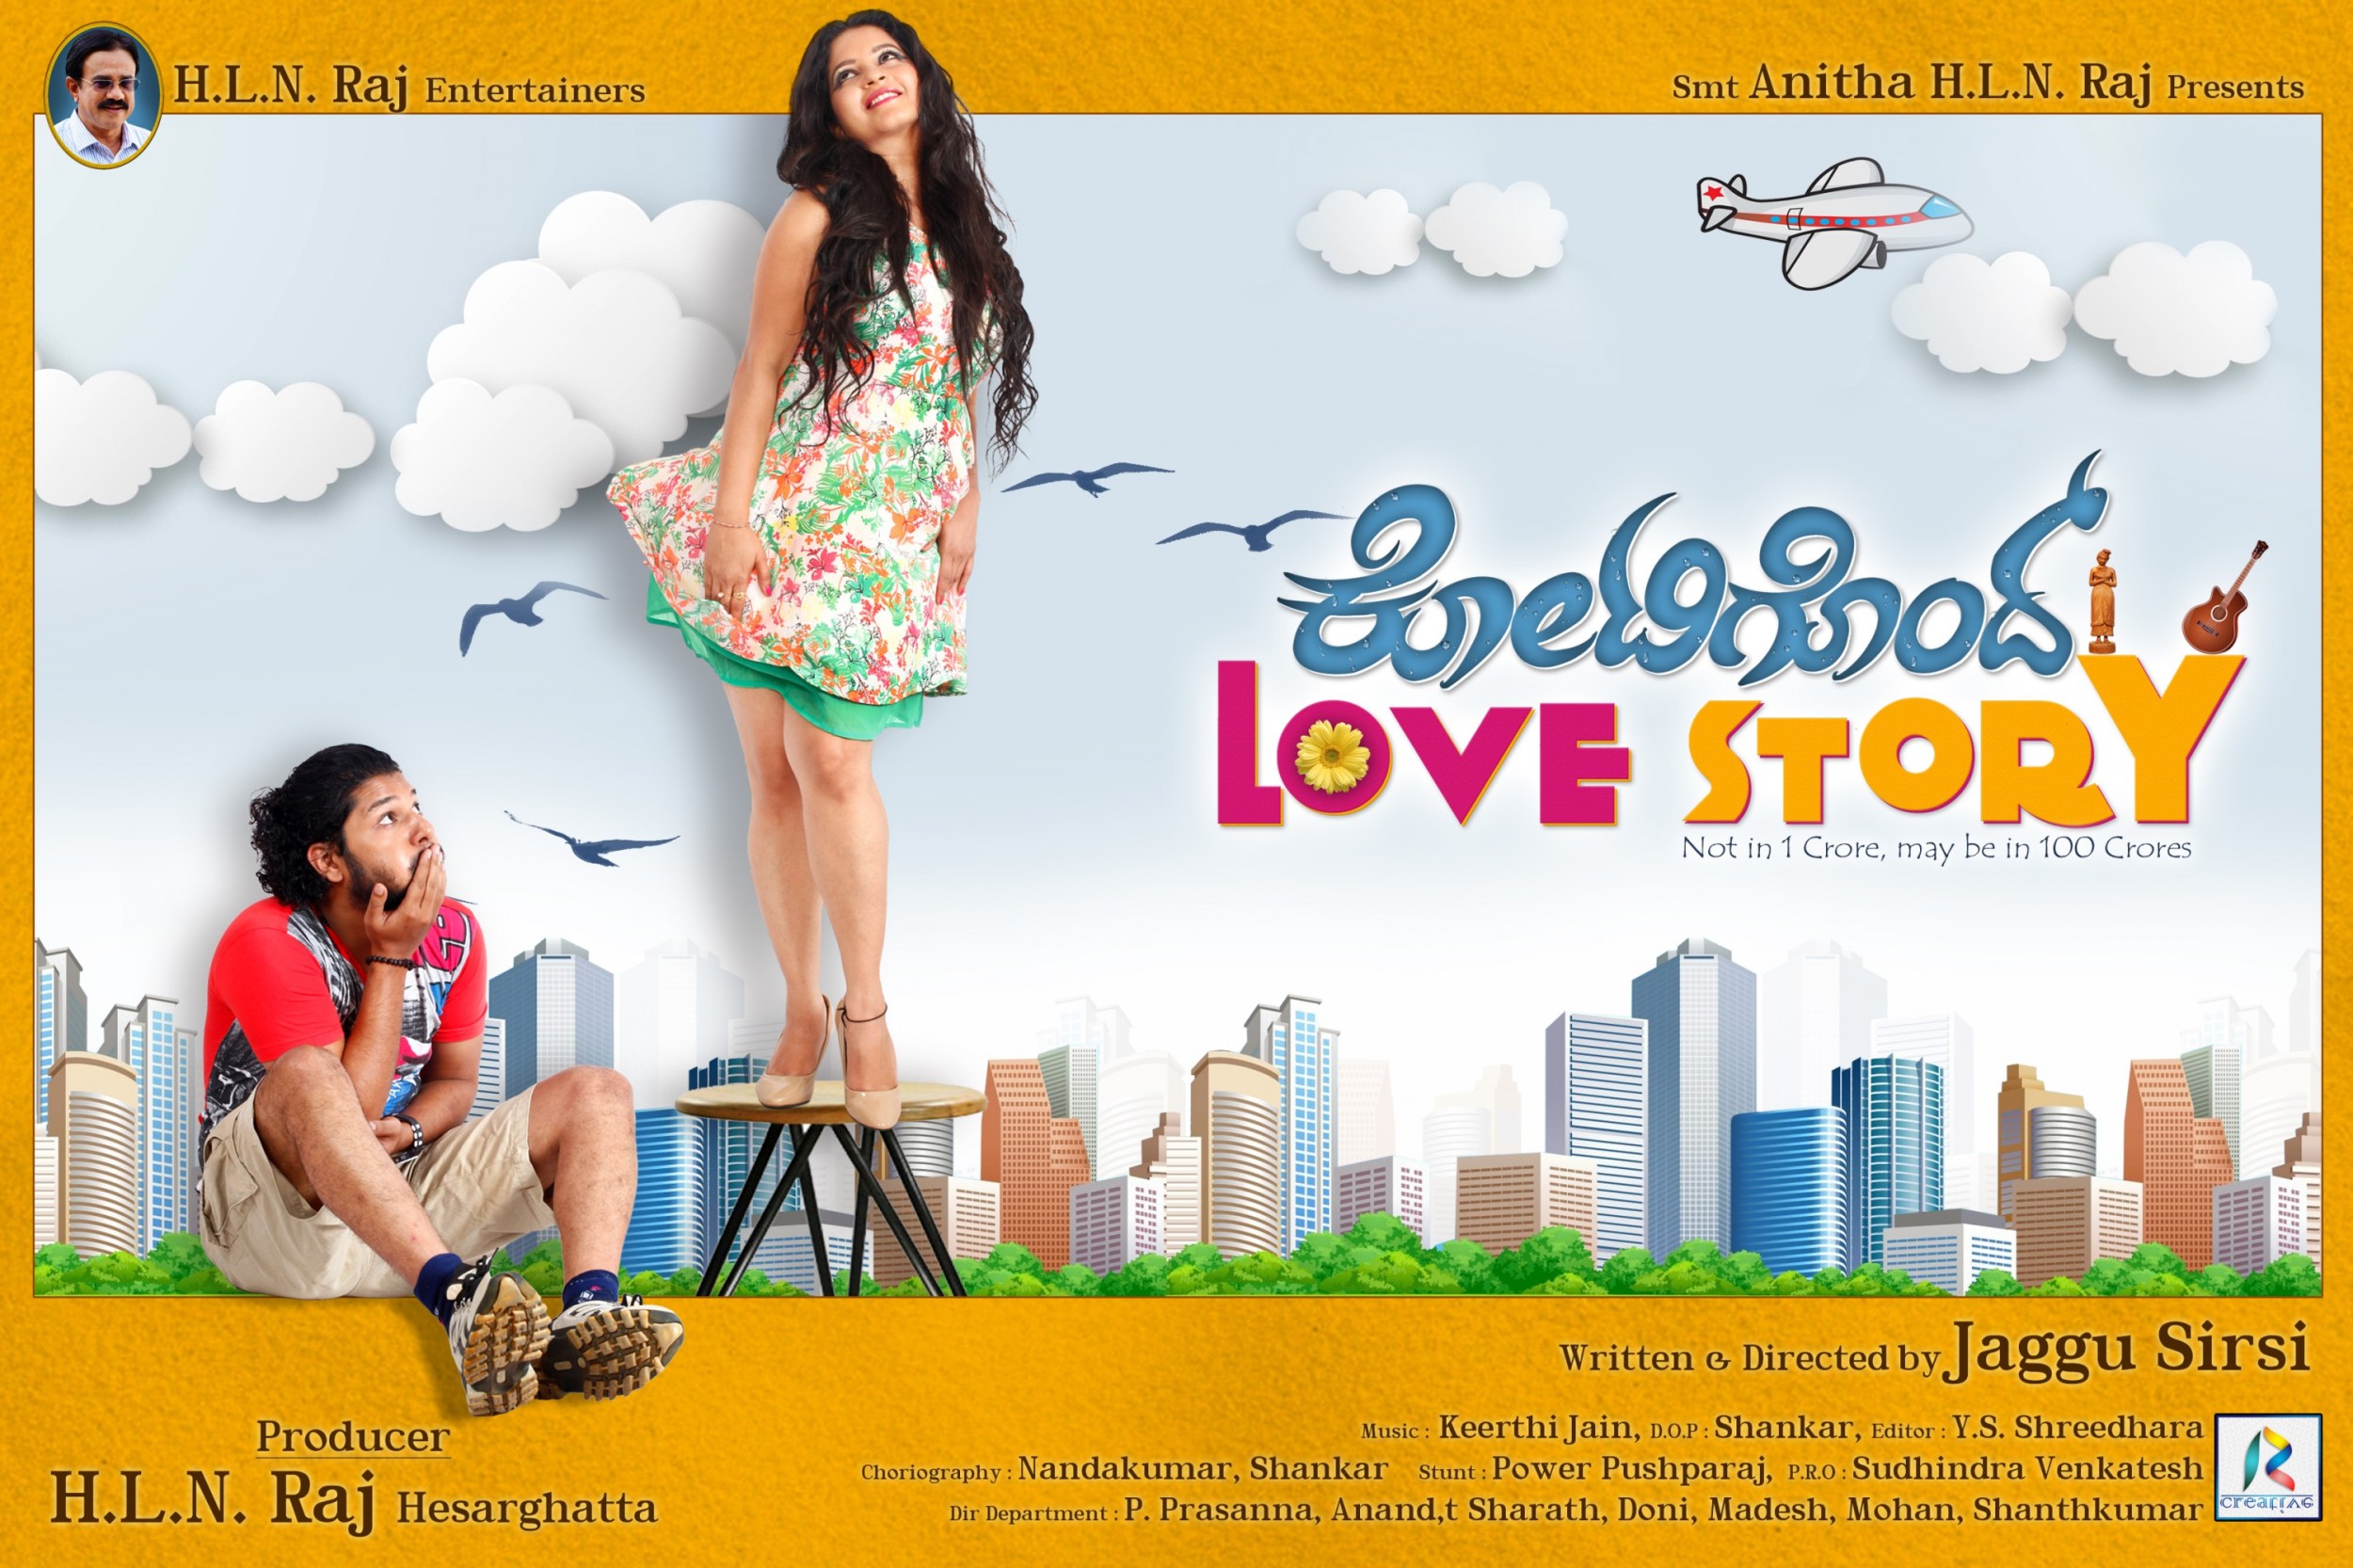 Mega Sized Movie Poster Image for Kotigondu Love Story (#2 of 3)